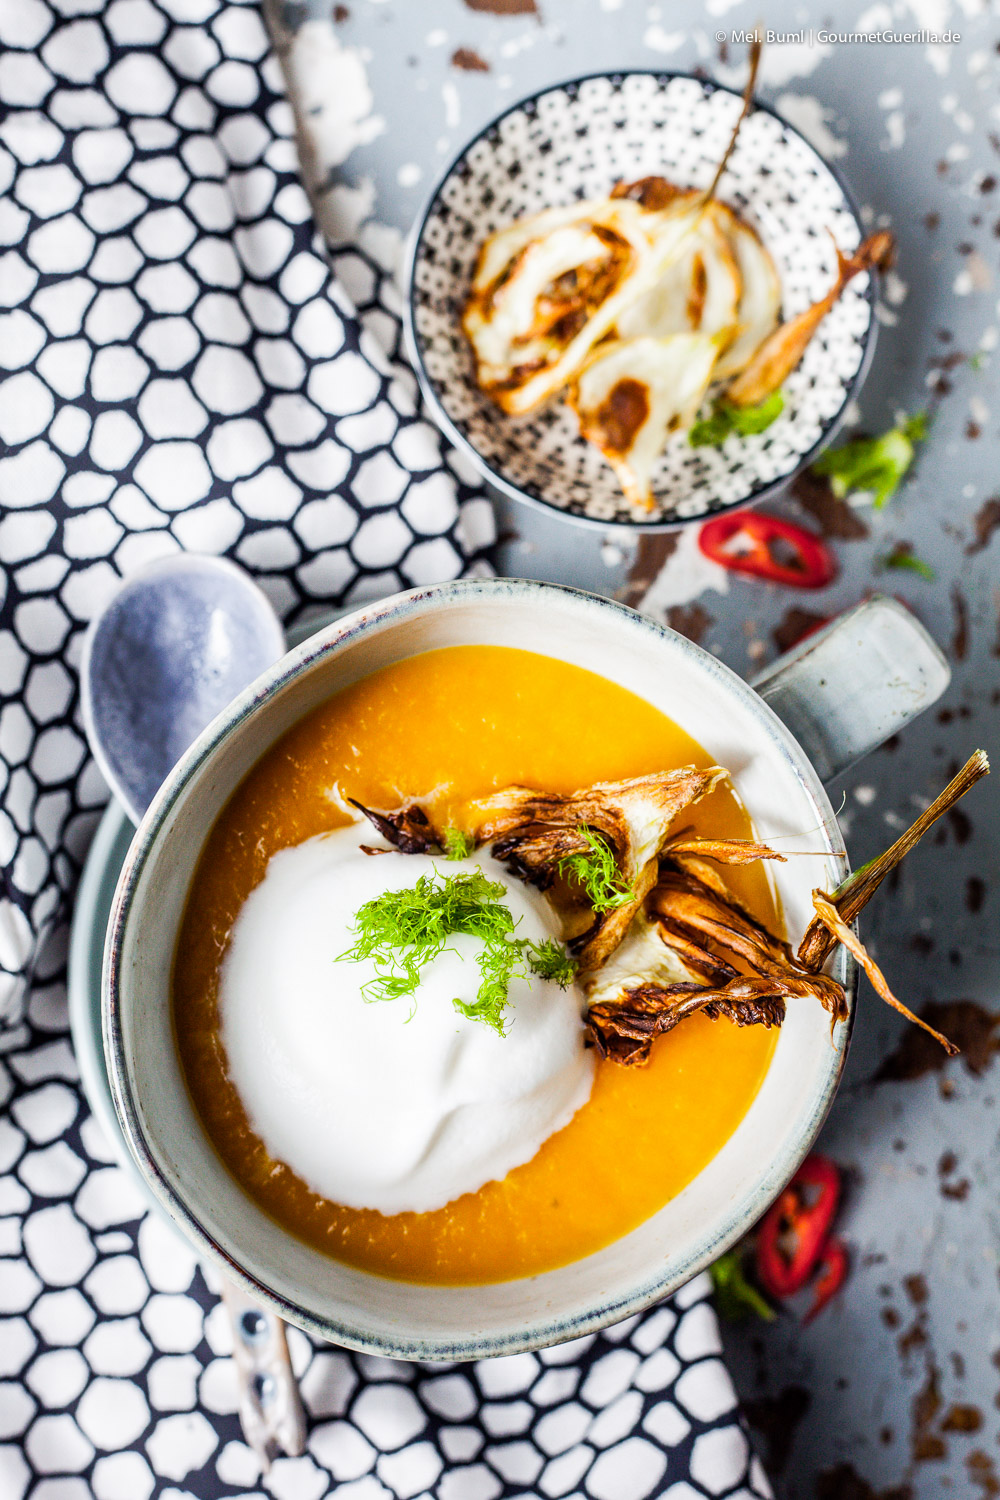  Melon and carrot soup with chili foam and GourmetGuerilla.de 